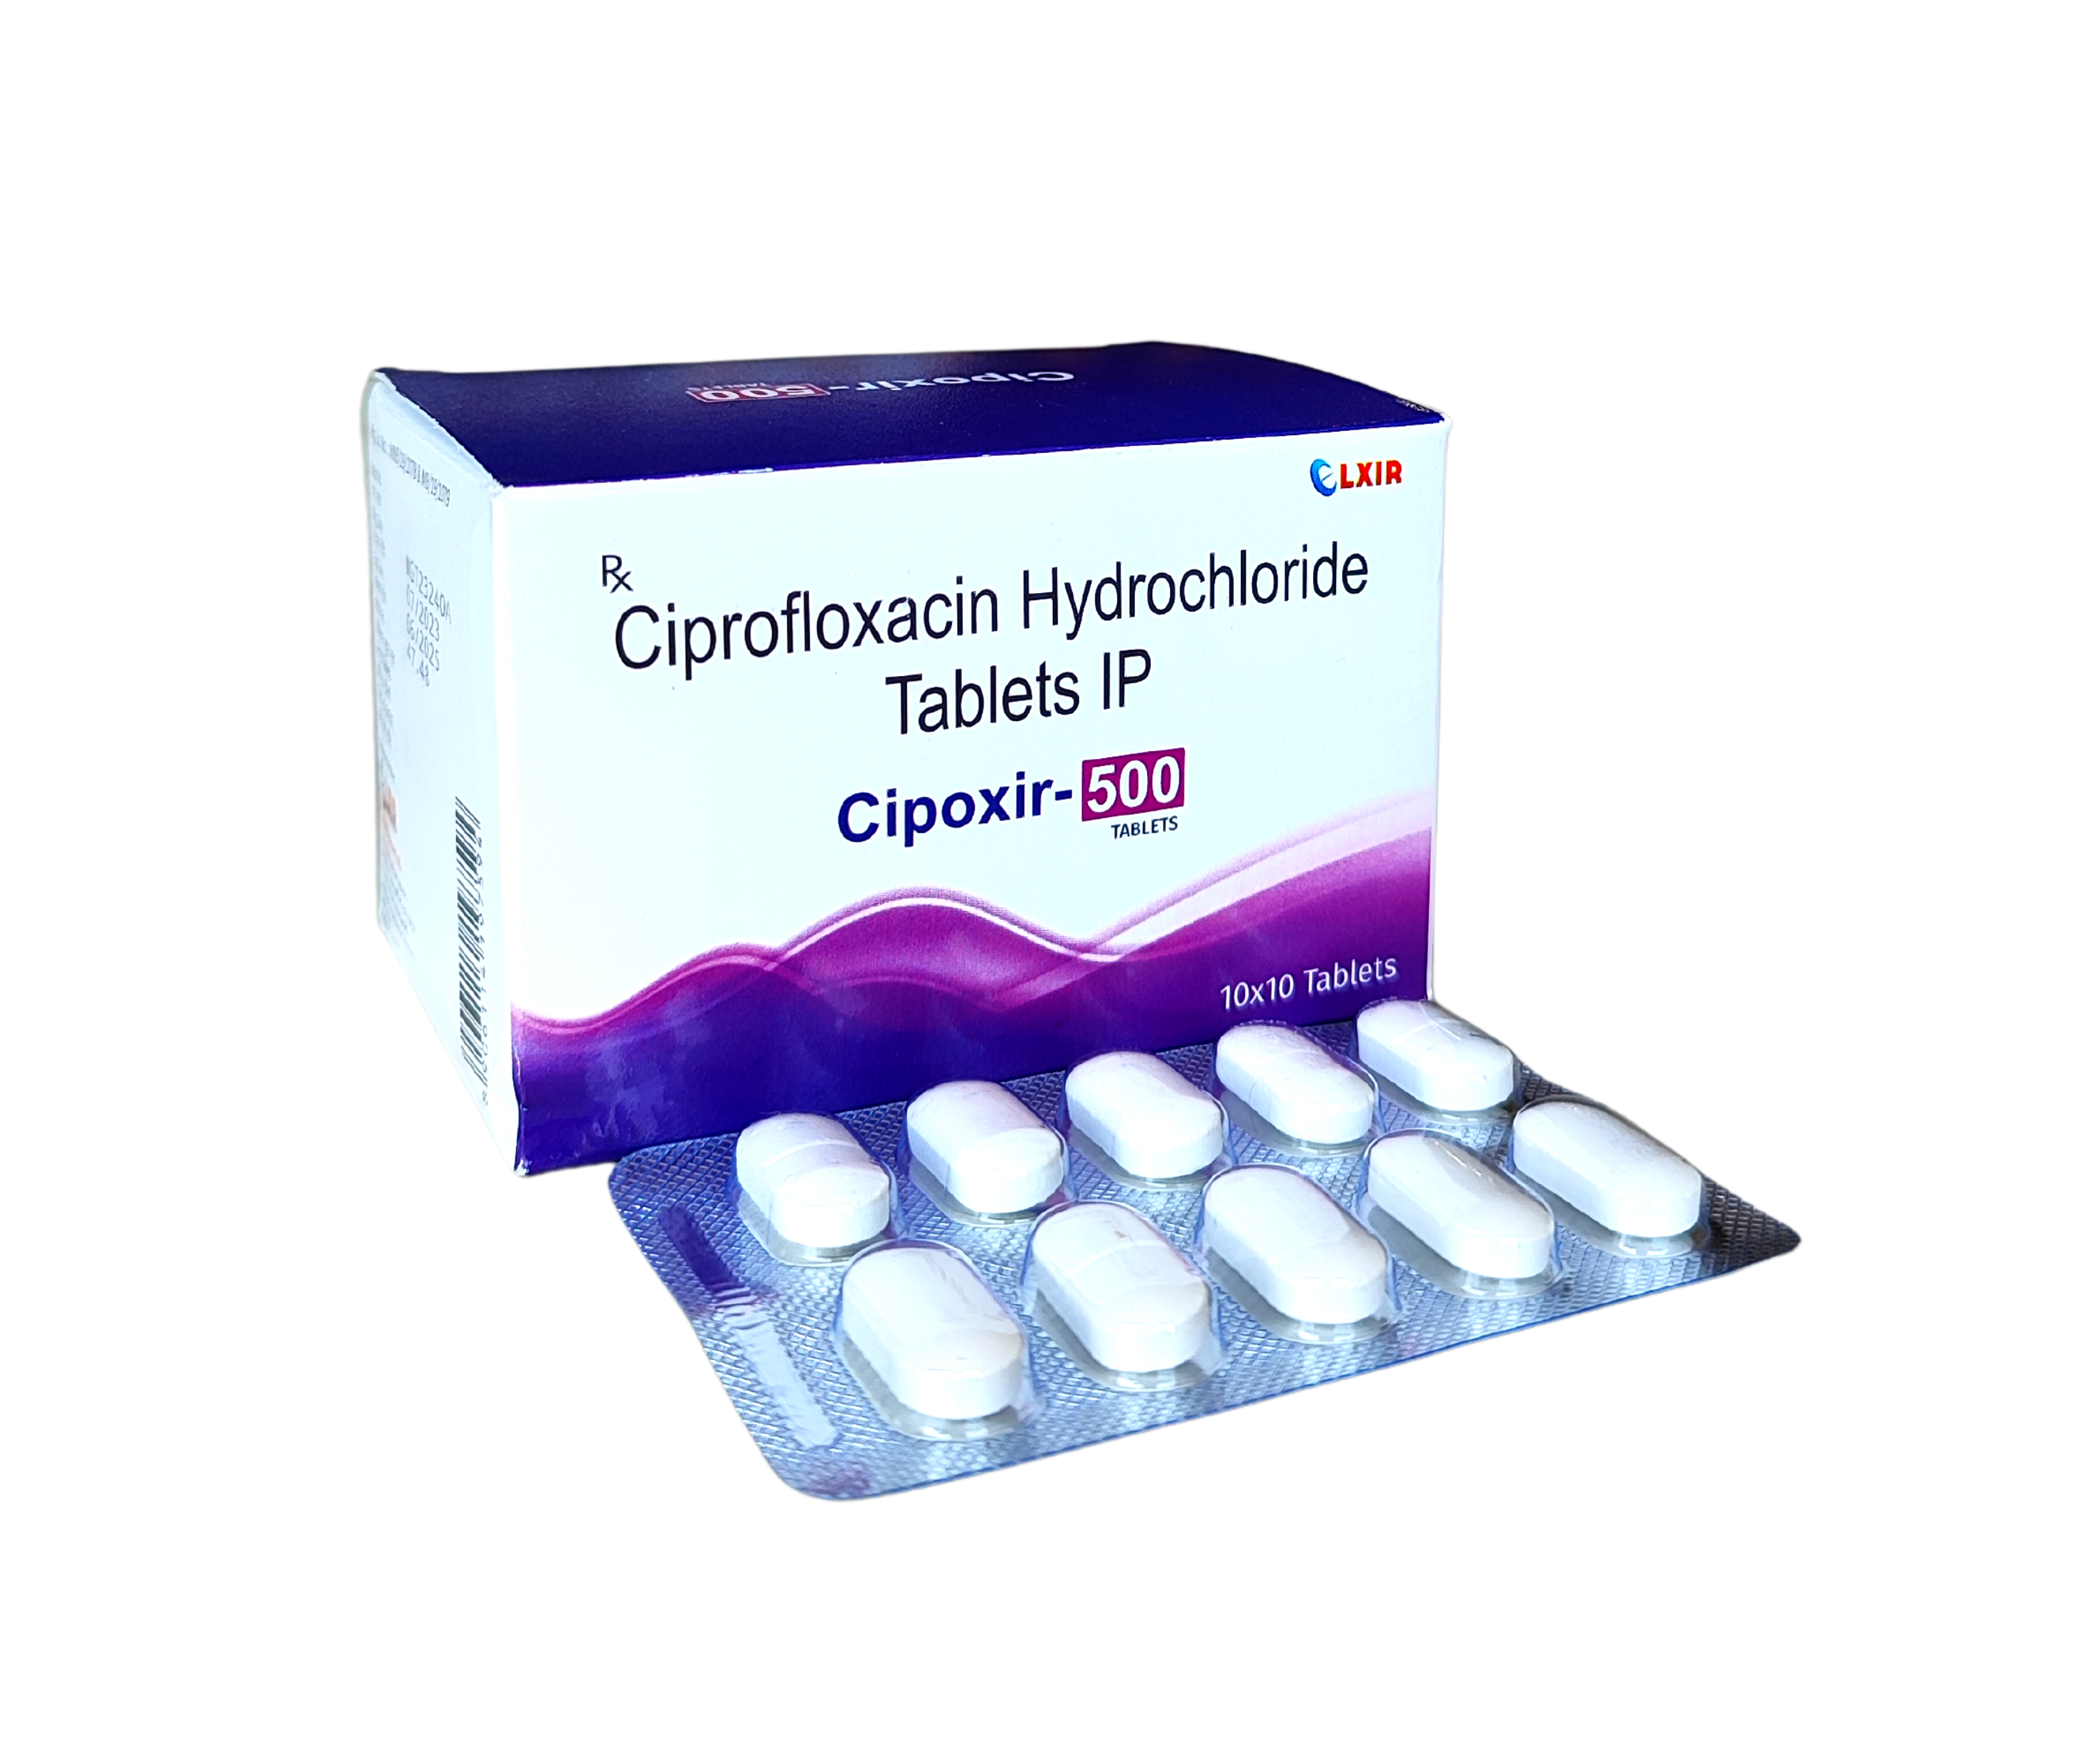 Ciprofloxacin hydrochloride tablets